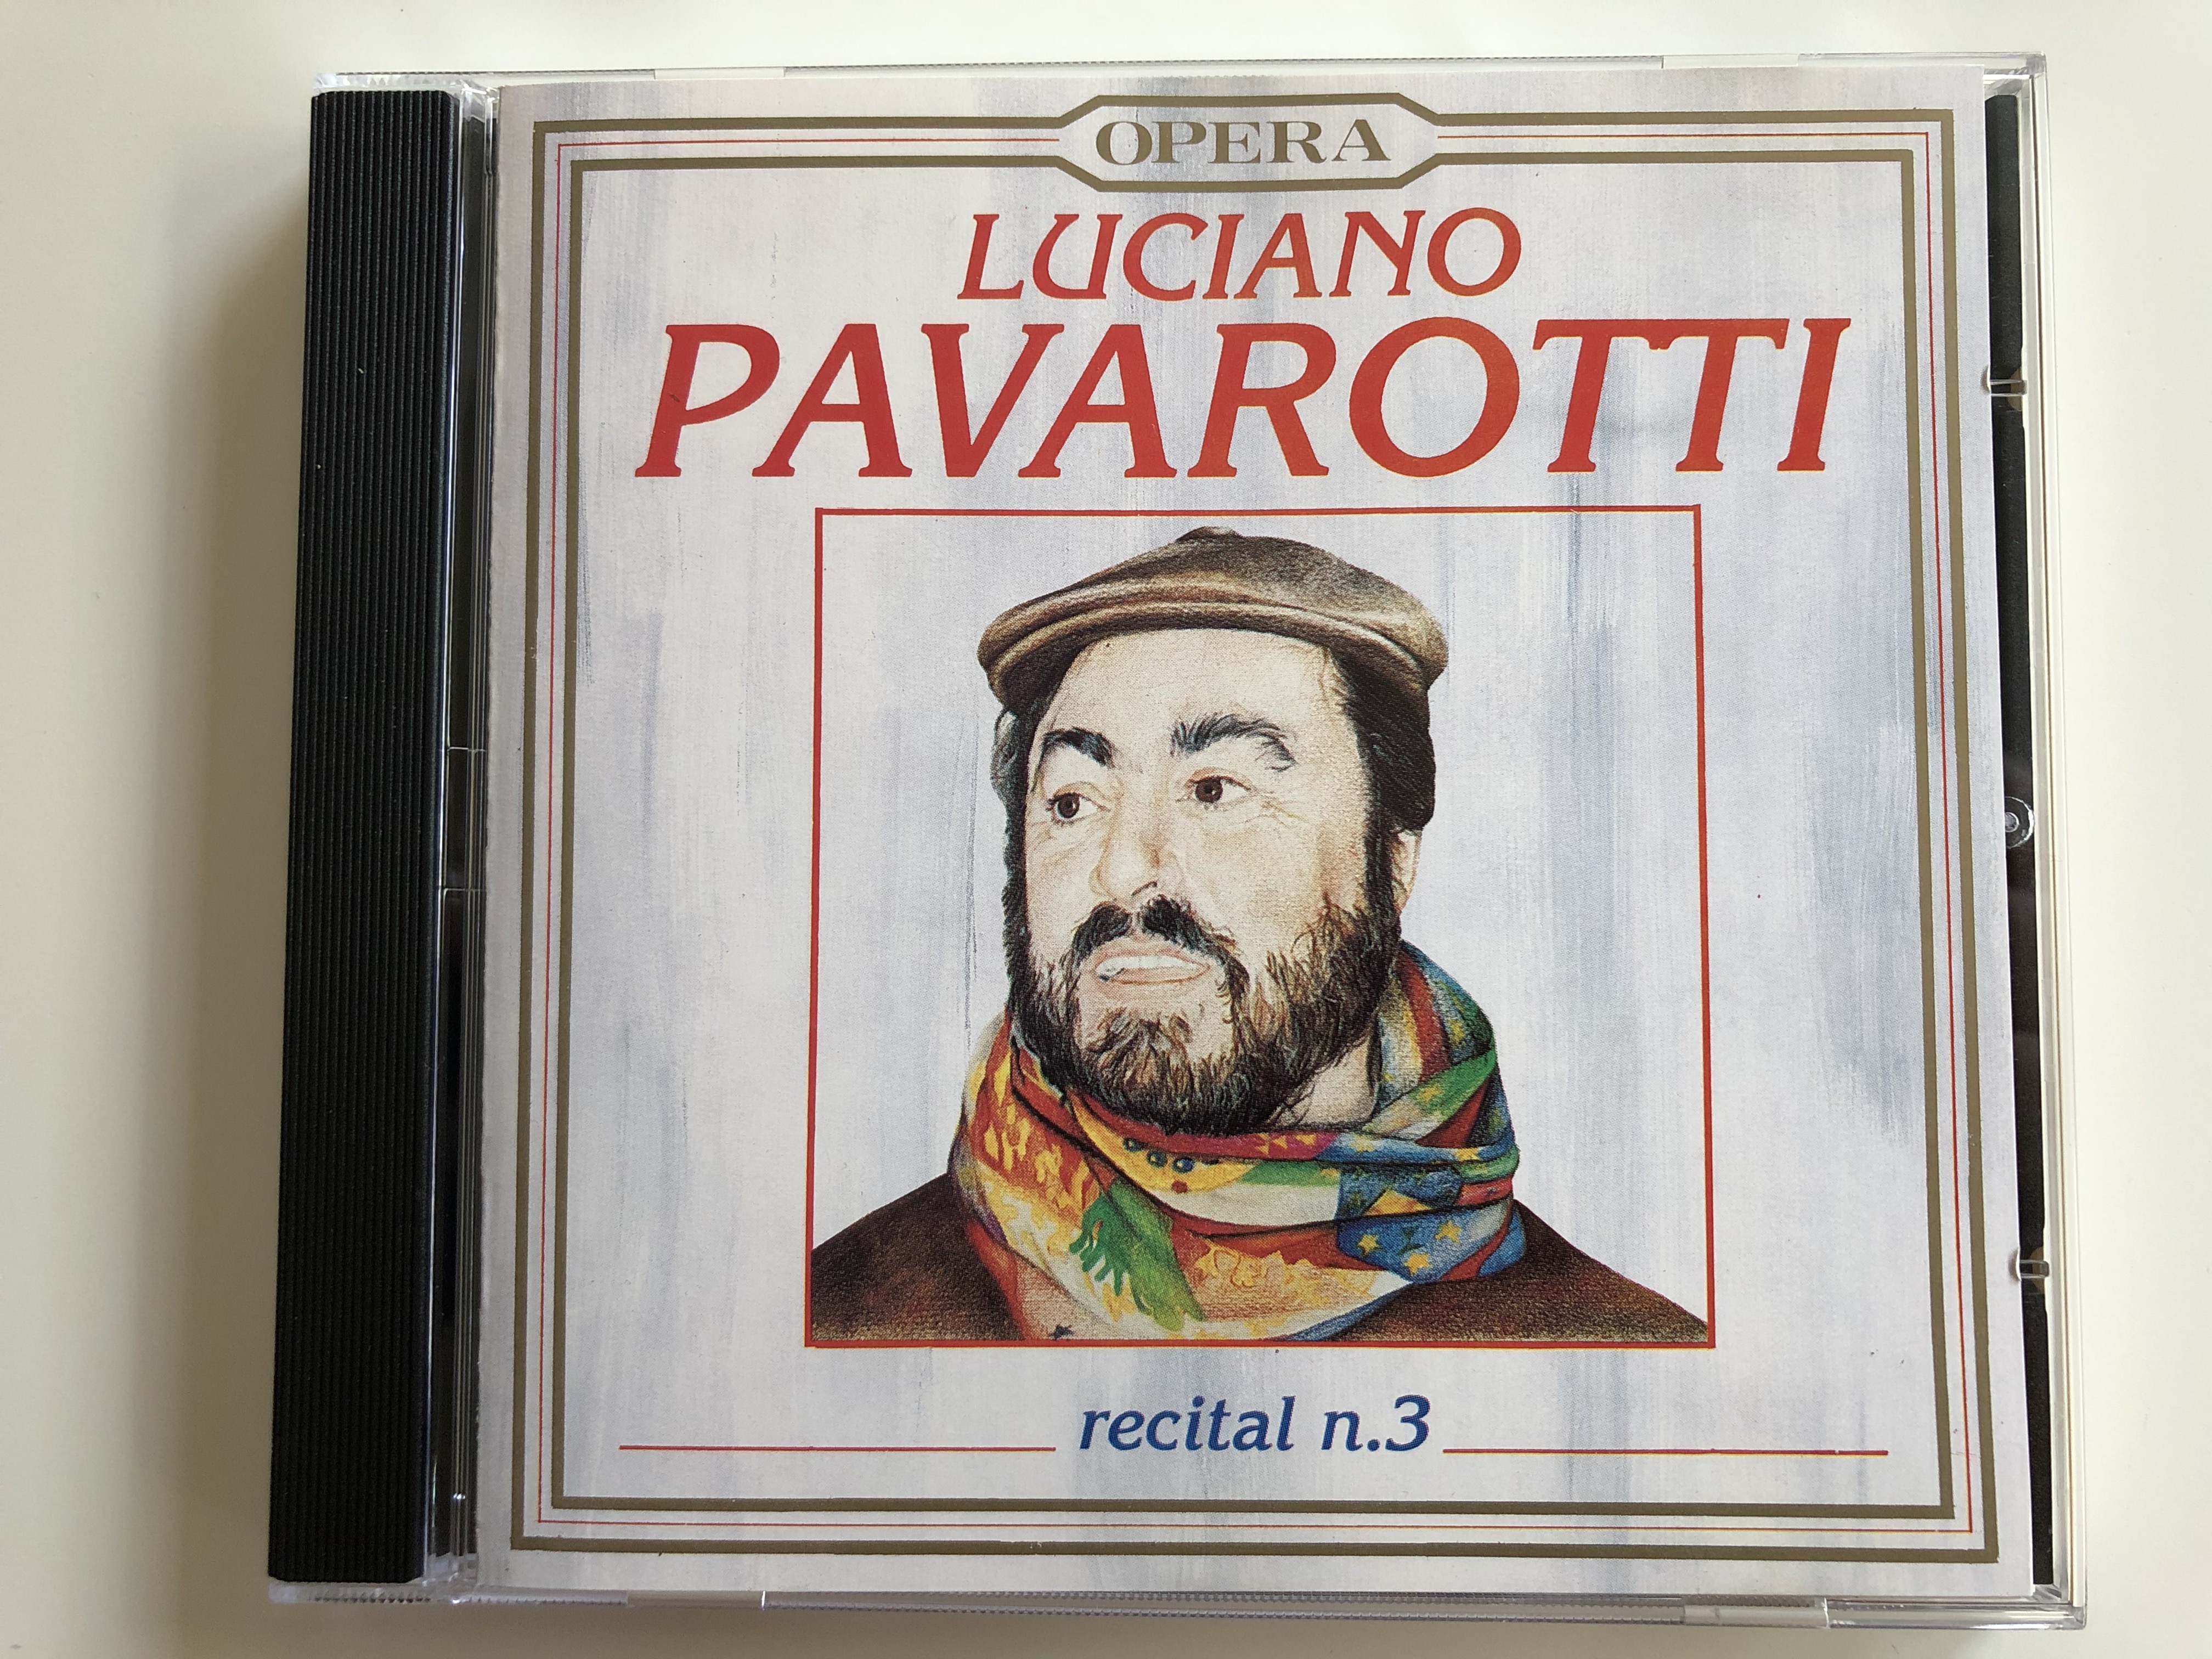 luciano-pavarotti-recital-n.3-opera-audio-cd-1991-cd-54053-1-.jpg